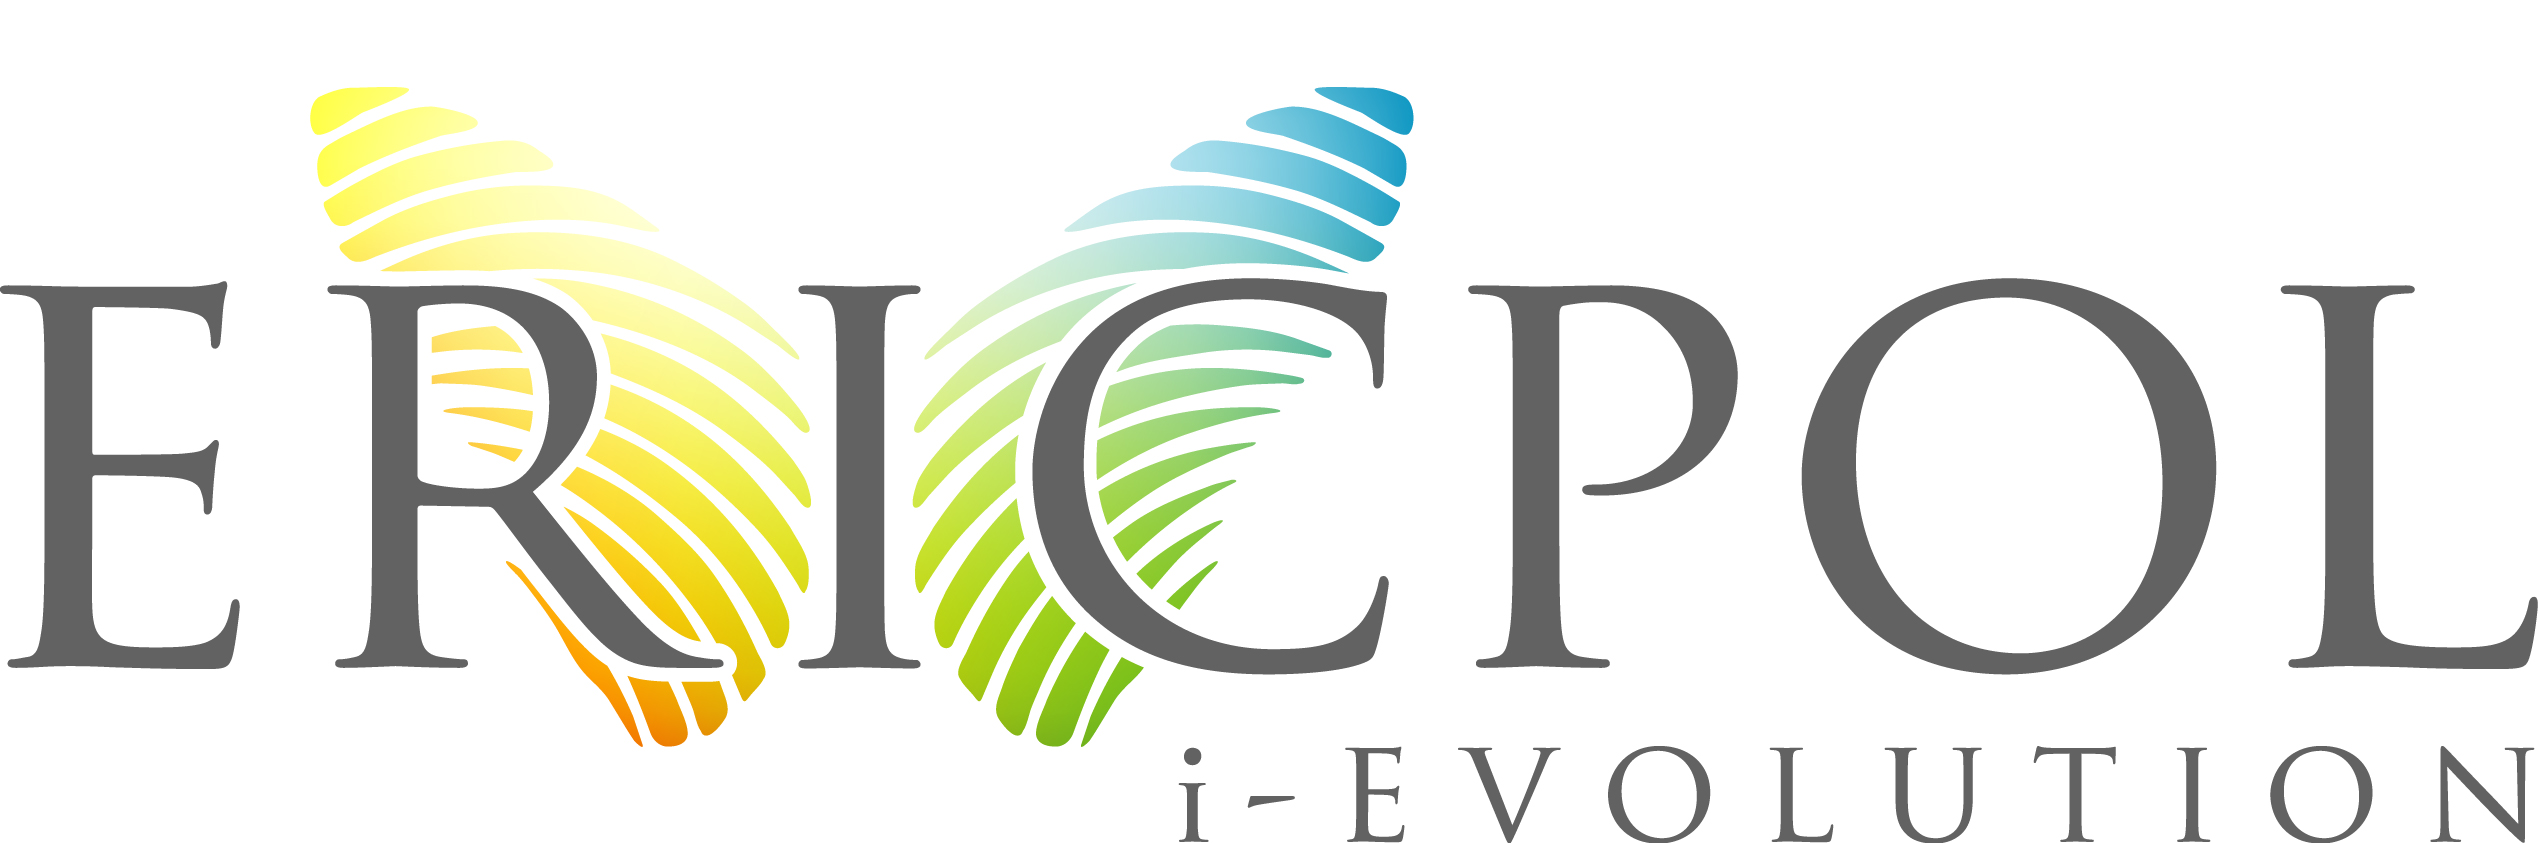 ericpol-logo.jpg